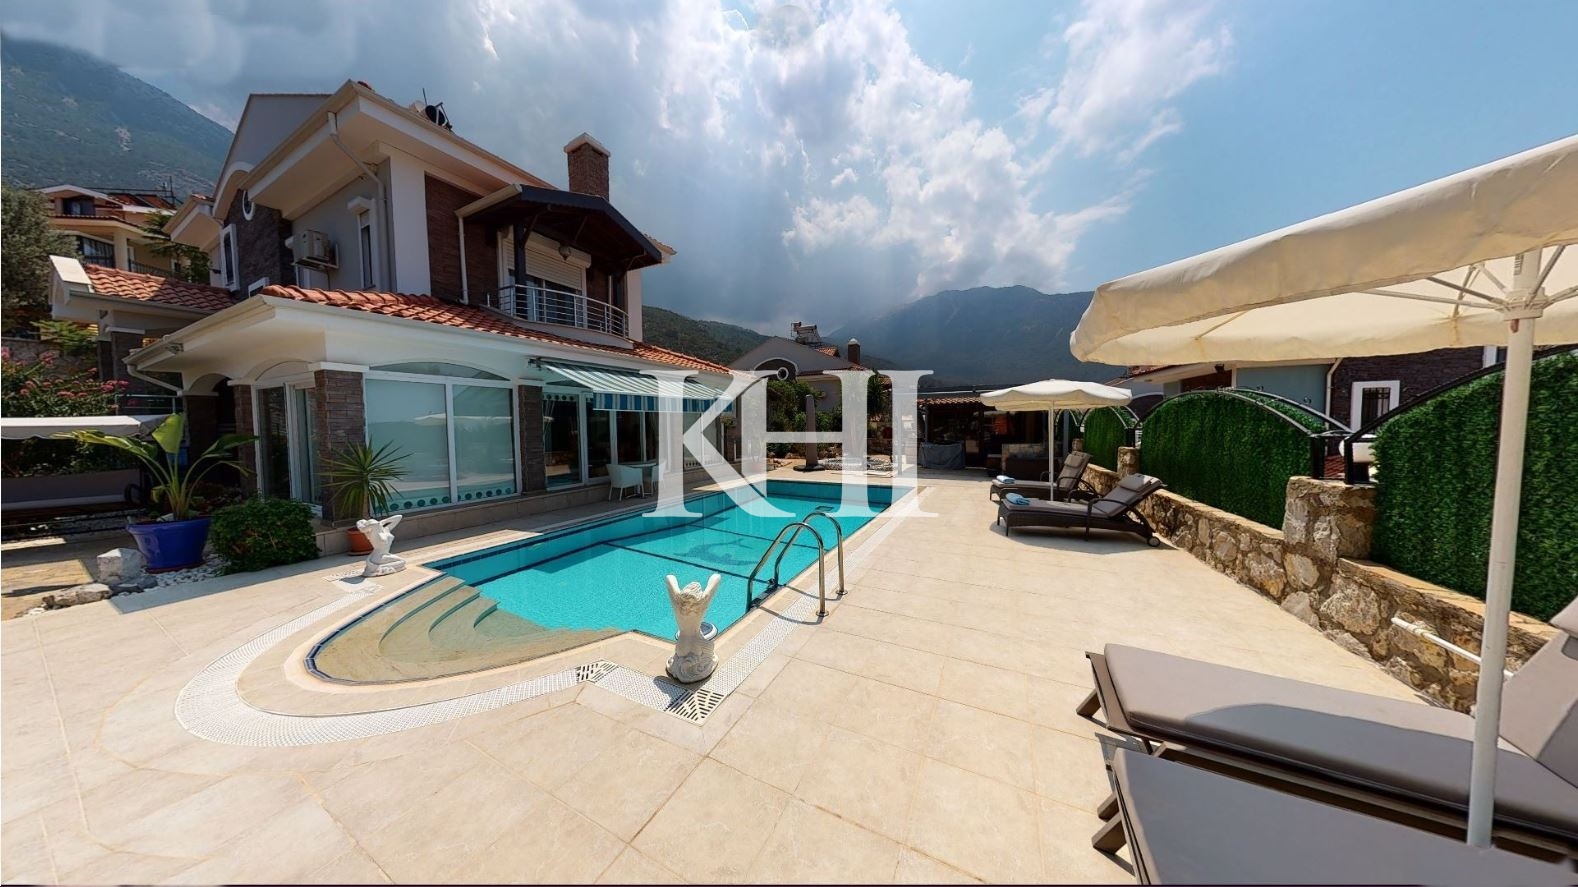 Detached Family Villa In Ovacik Slide Image 3